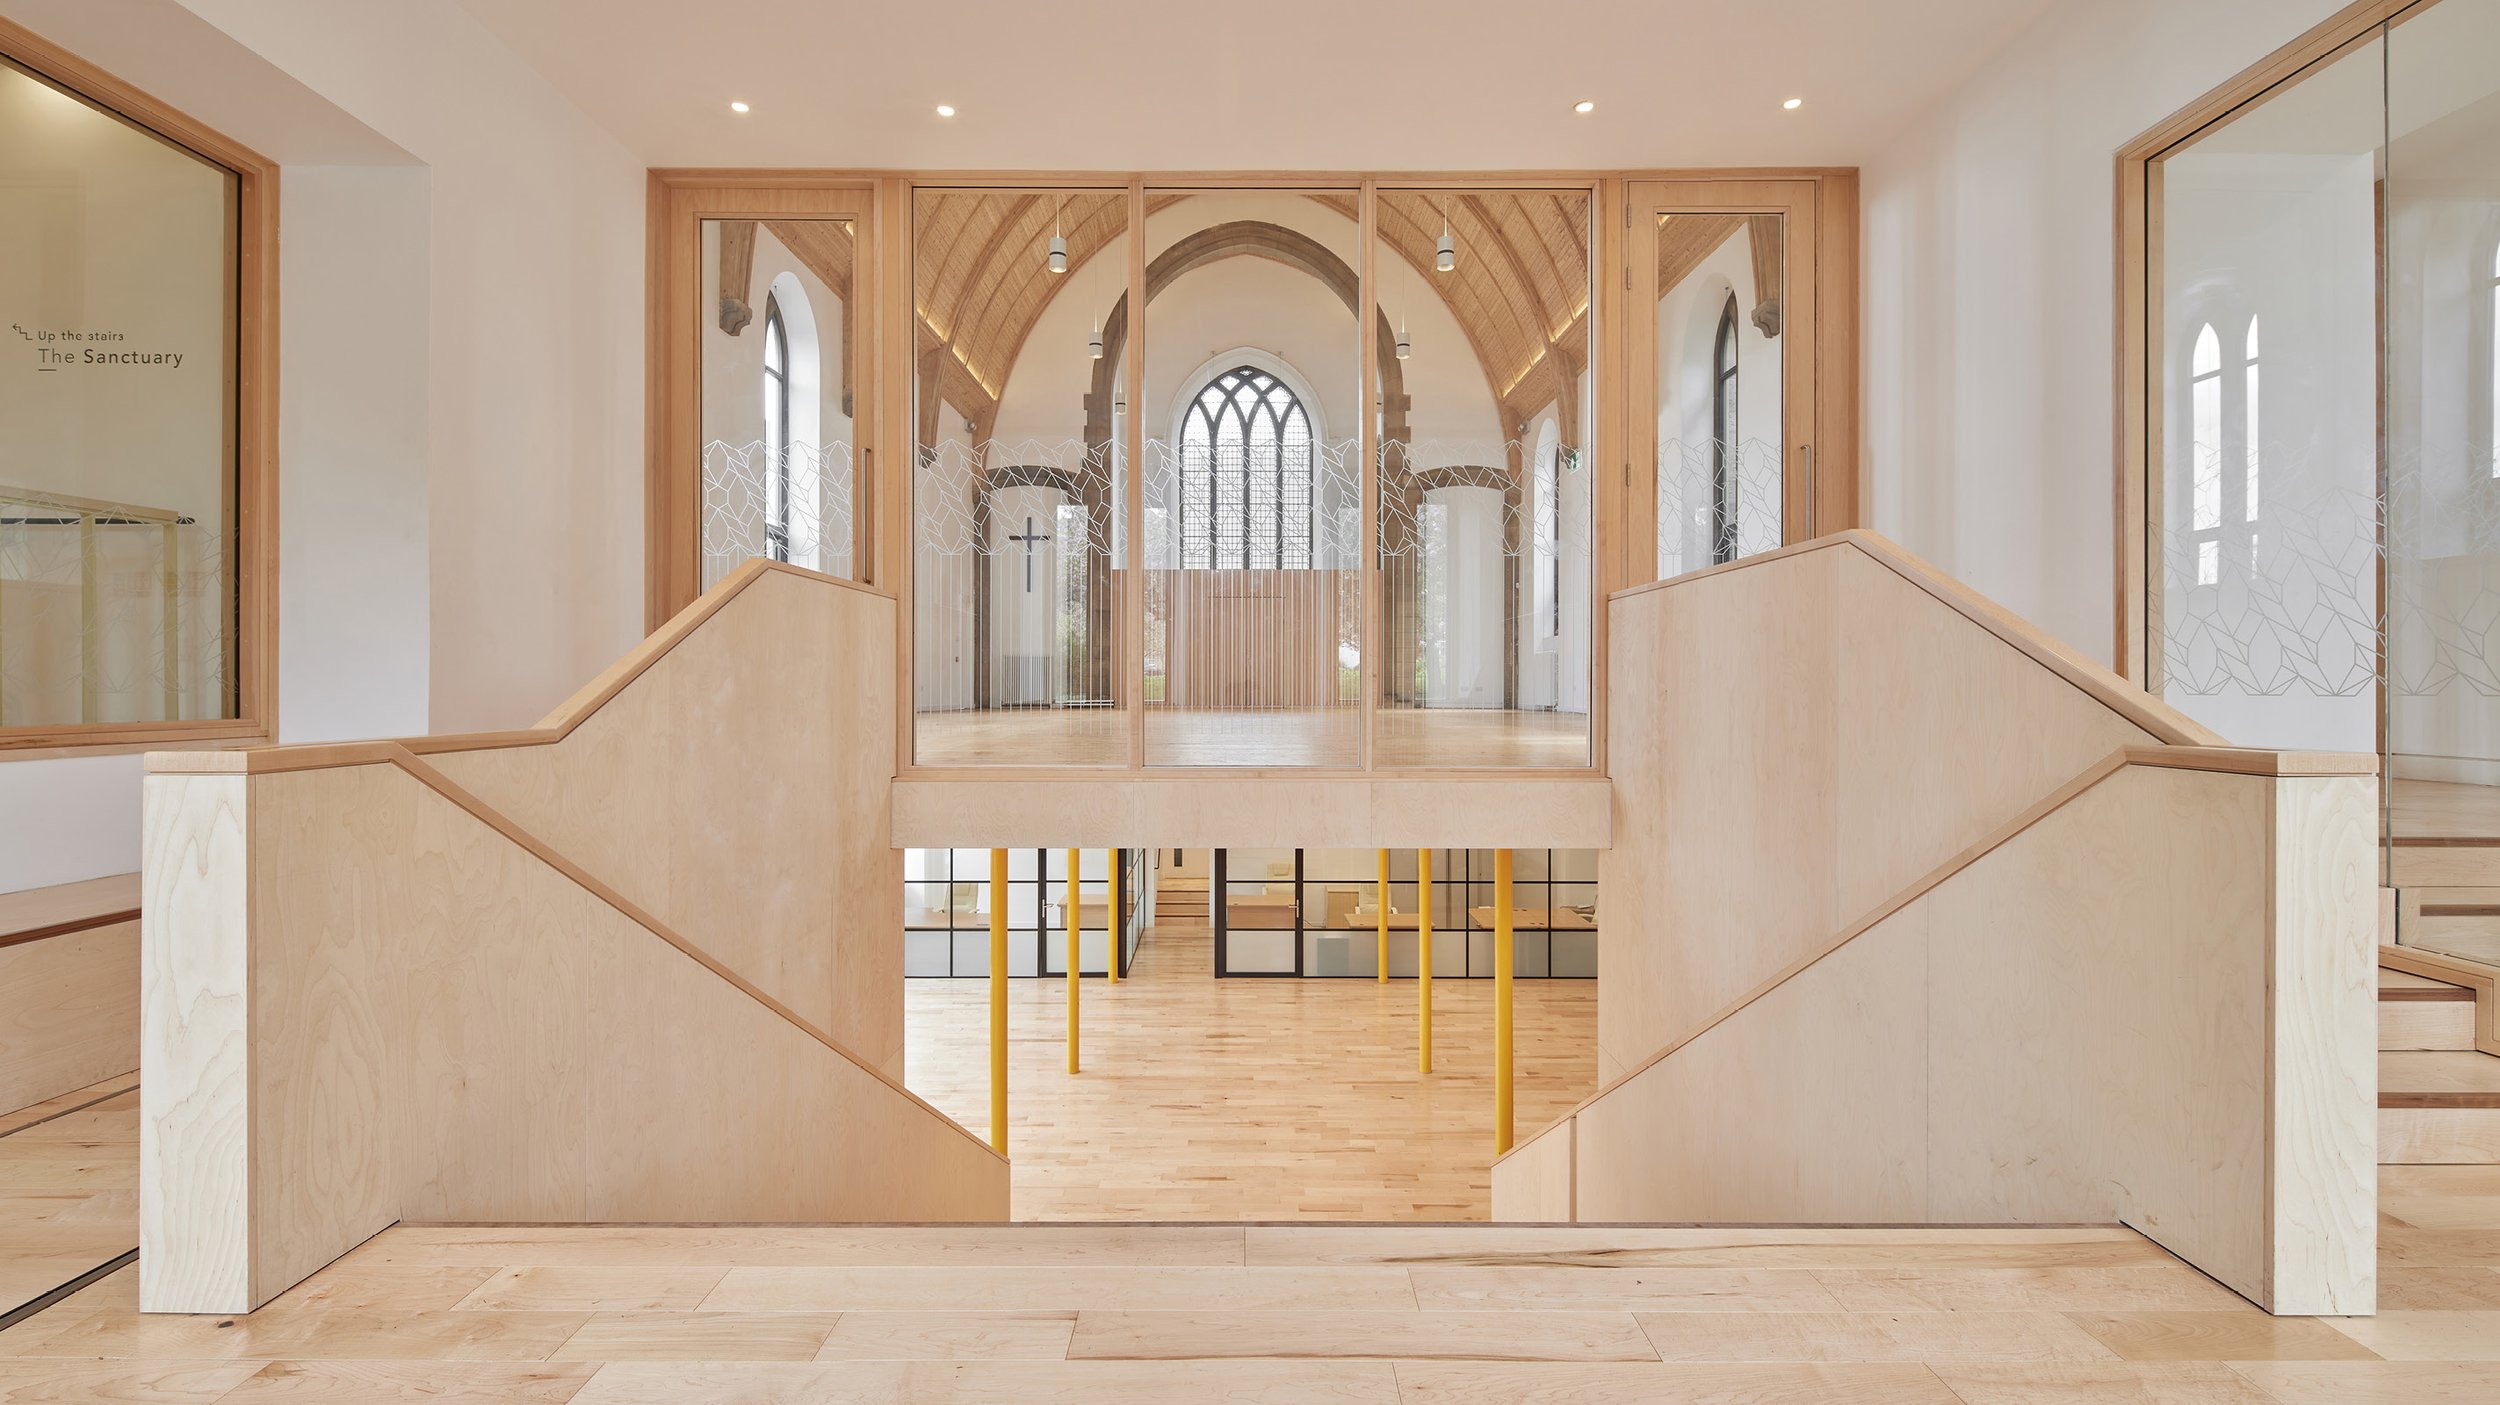 eaa-edinburgh-architectural-association-scotland-uk-awards-2022-winners-large-project-10.jpg